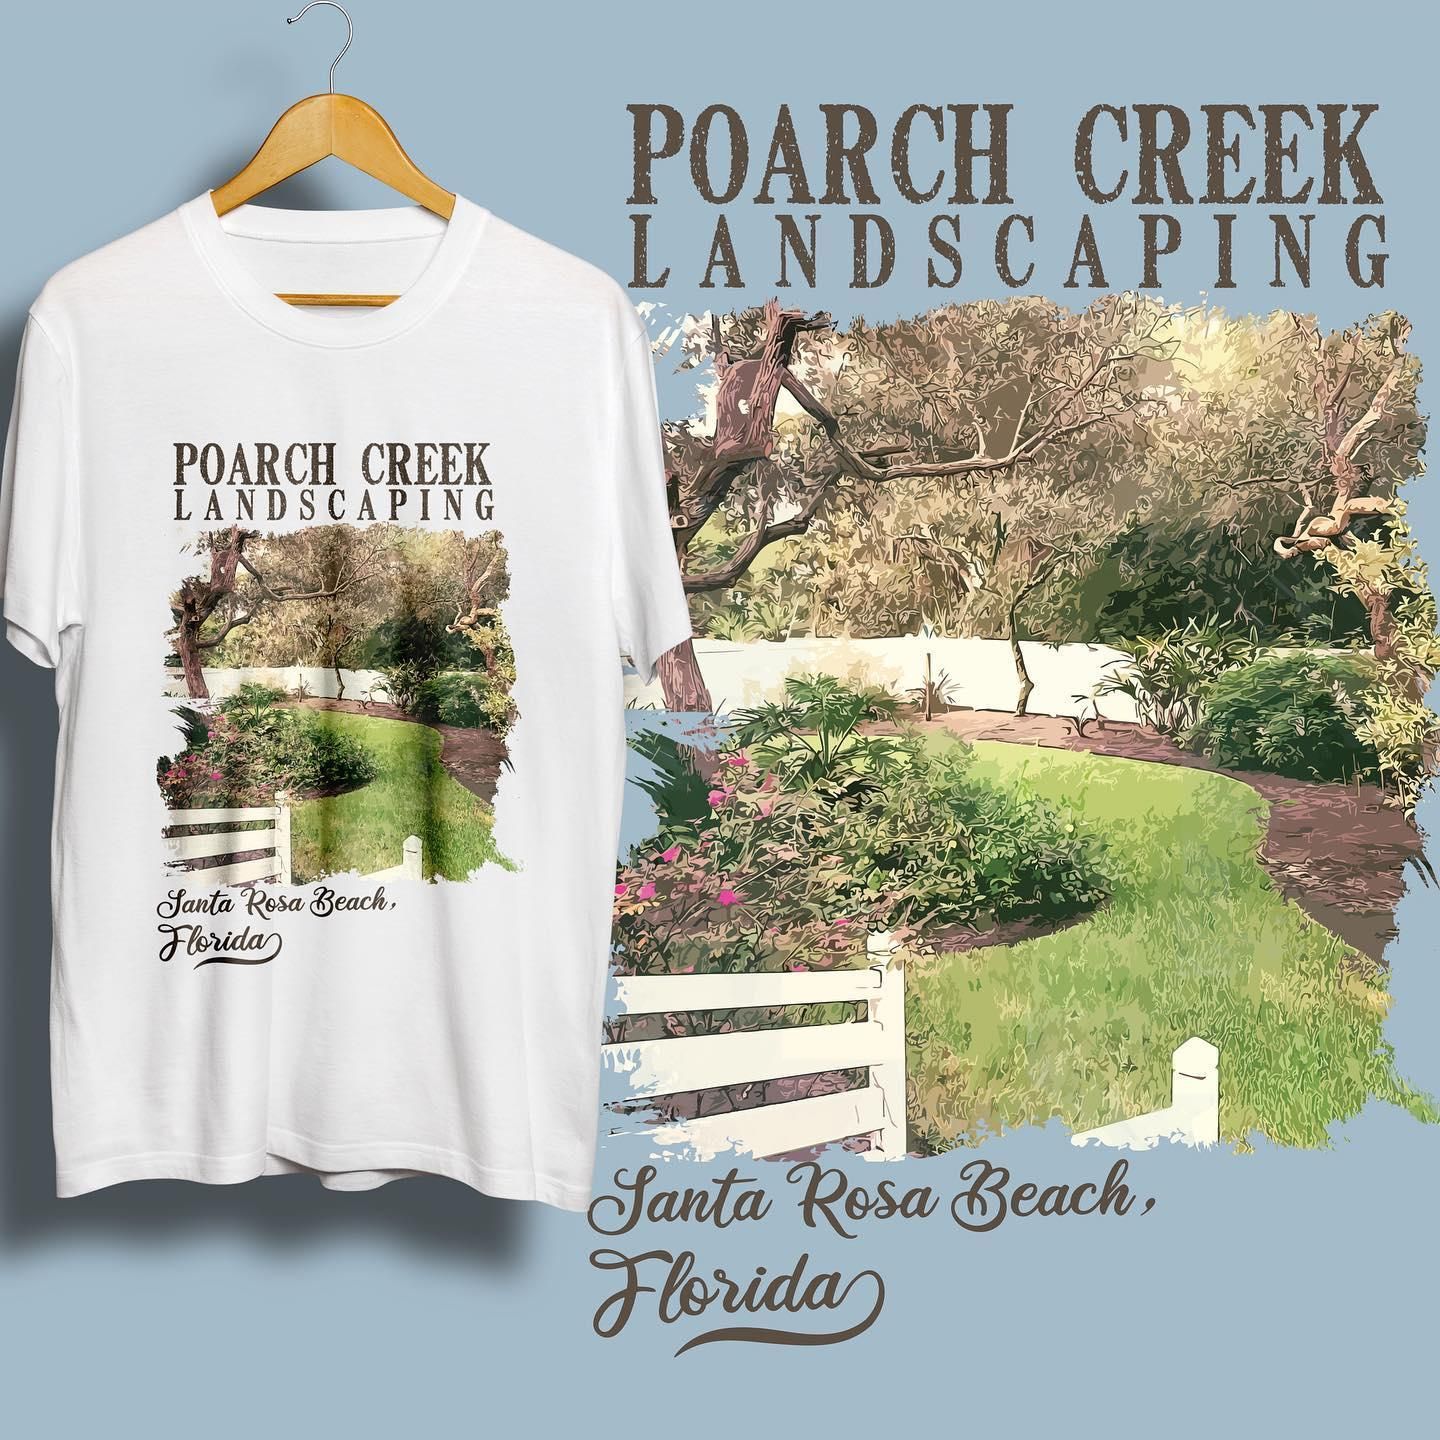 Patio Design & Construction for Poarch Creek Landscaping in Santa Rosa Beach, FL